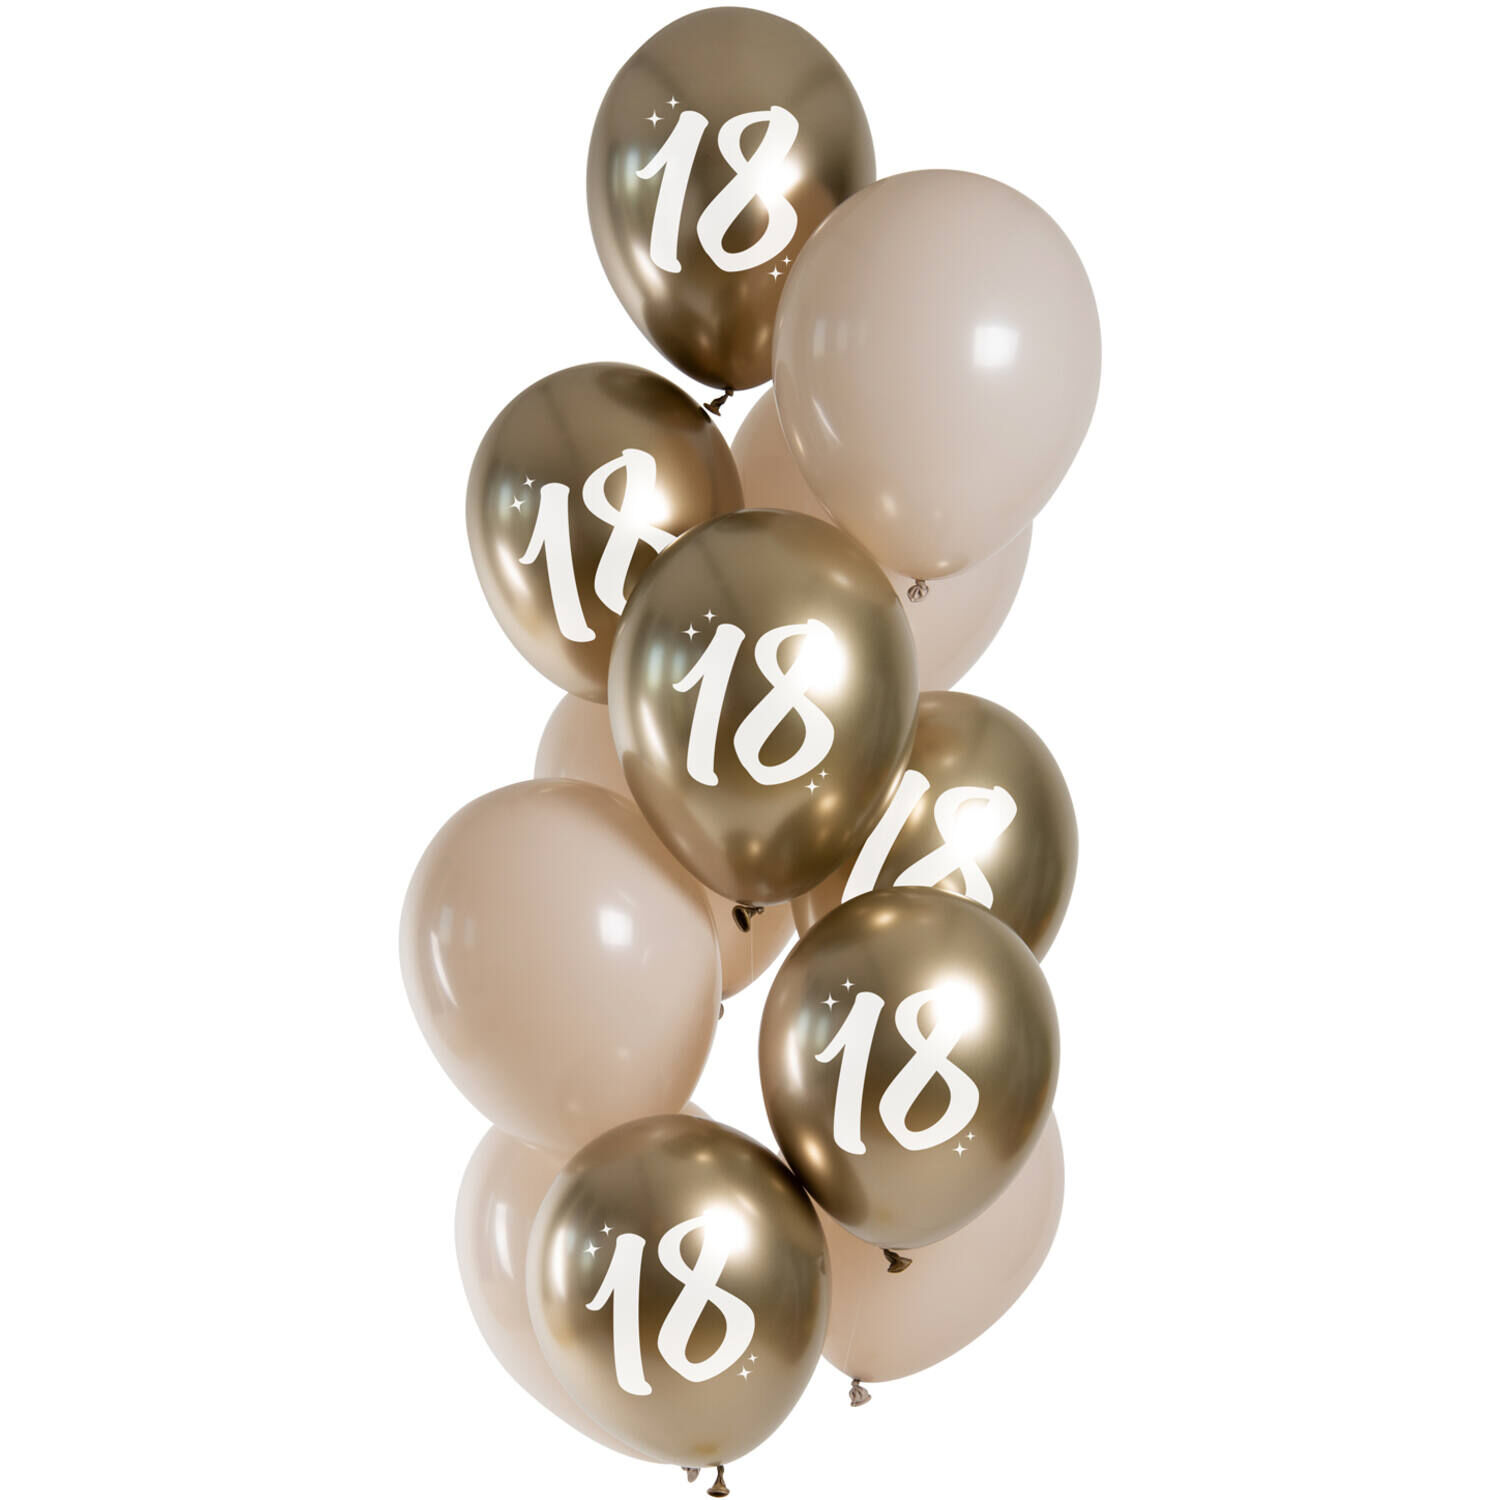 NEU Premium-Latex-Luftballons 18 Years, Golden Latte, 33cm , 12 stk